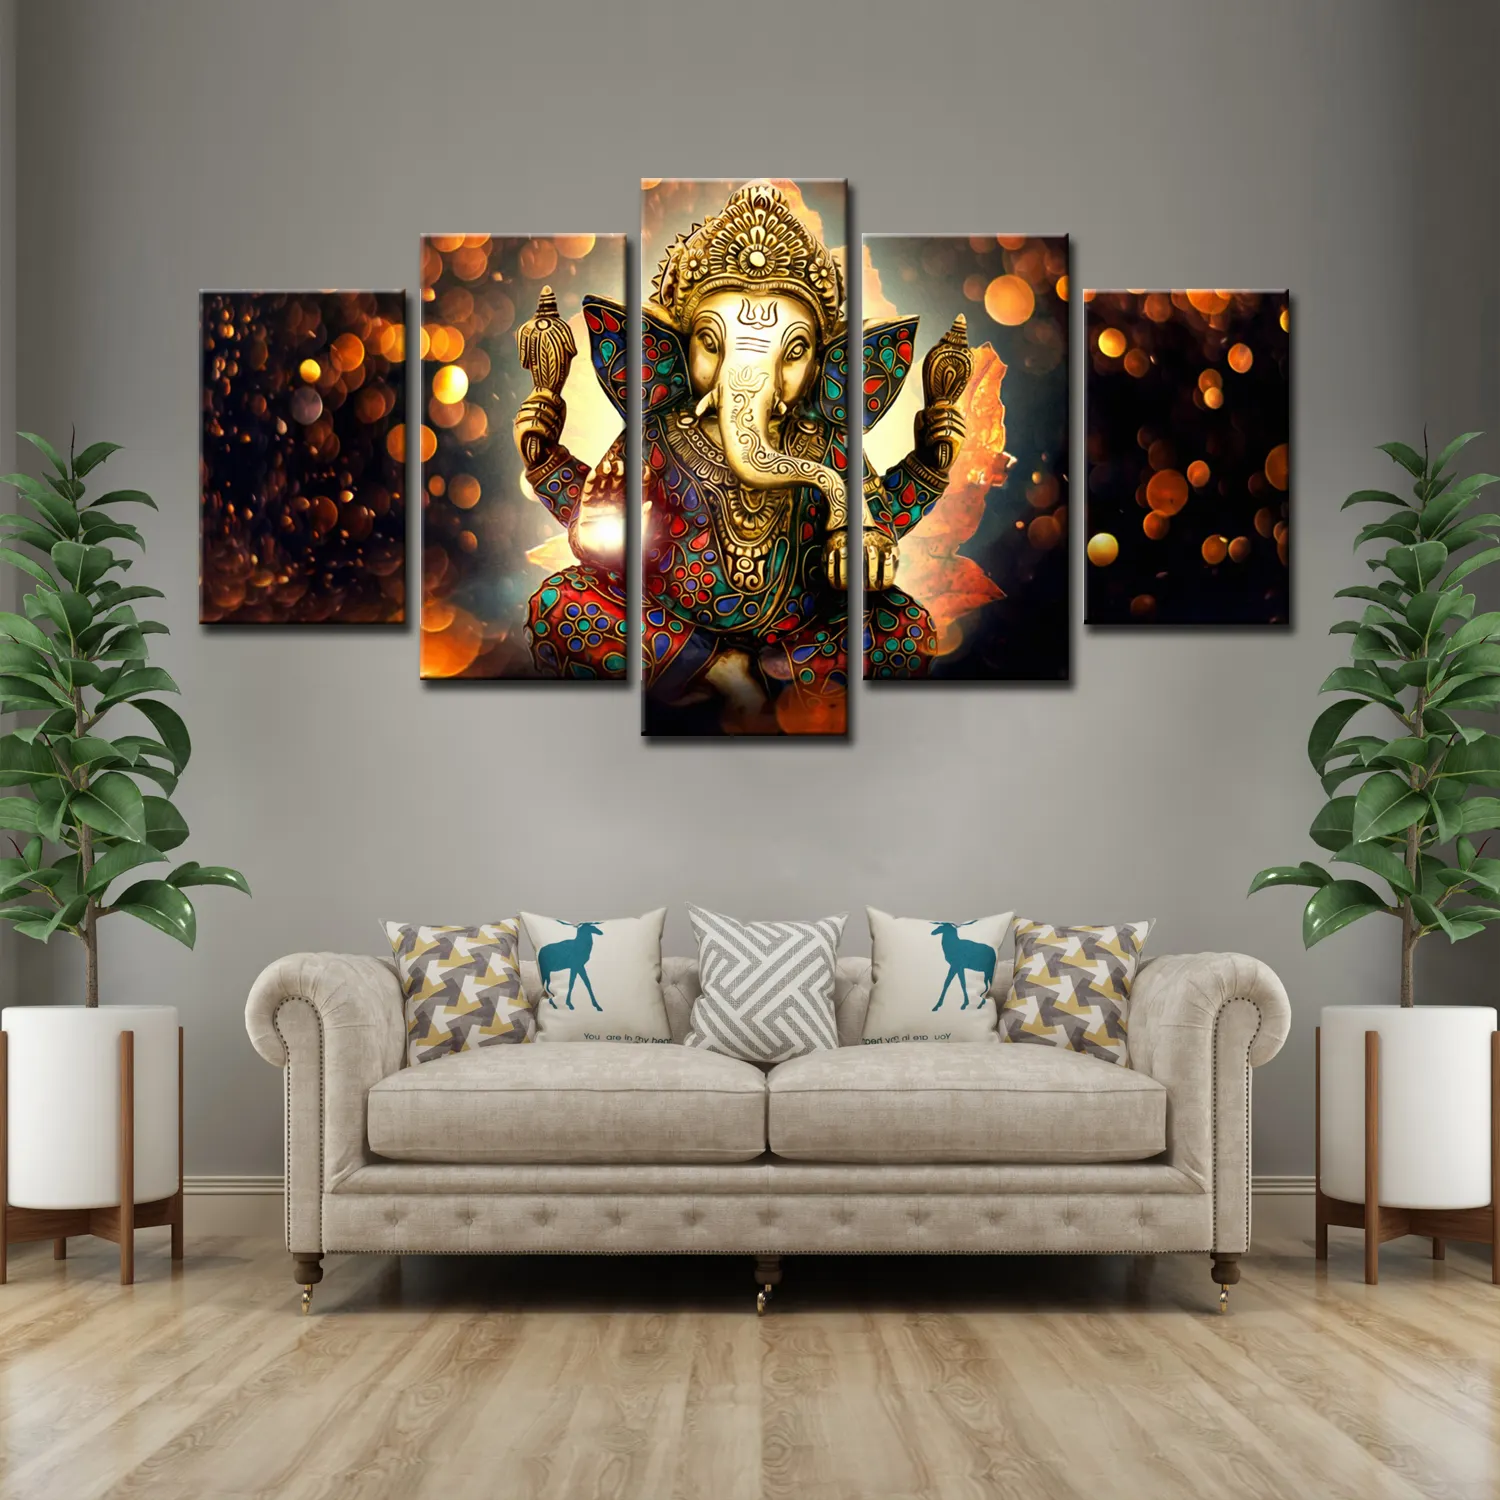 Lord Ganesha 5 Panels Indischer religiöser Gott Nase Elefant Öl Leinwand Gemälde Wand kunst Bild